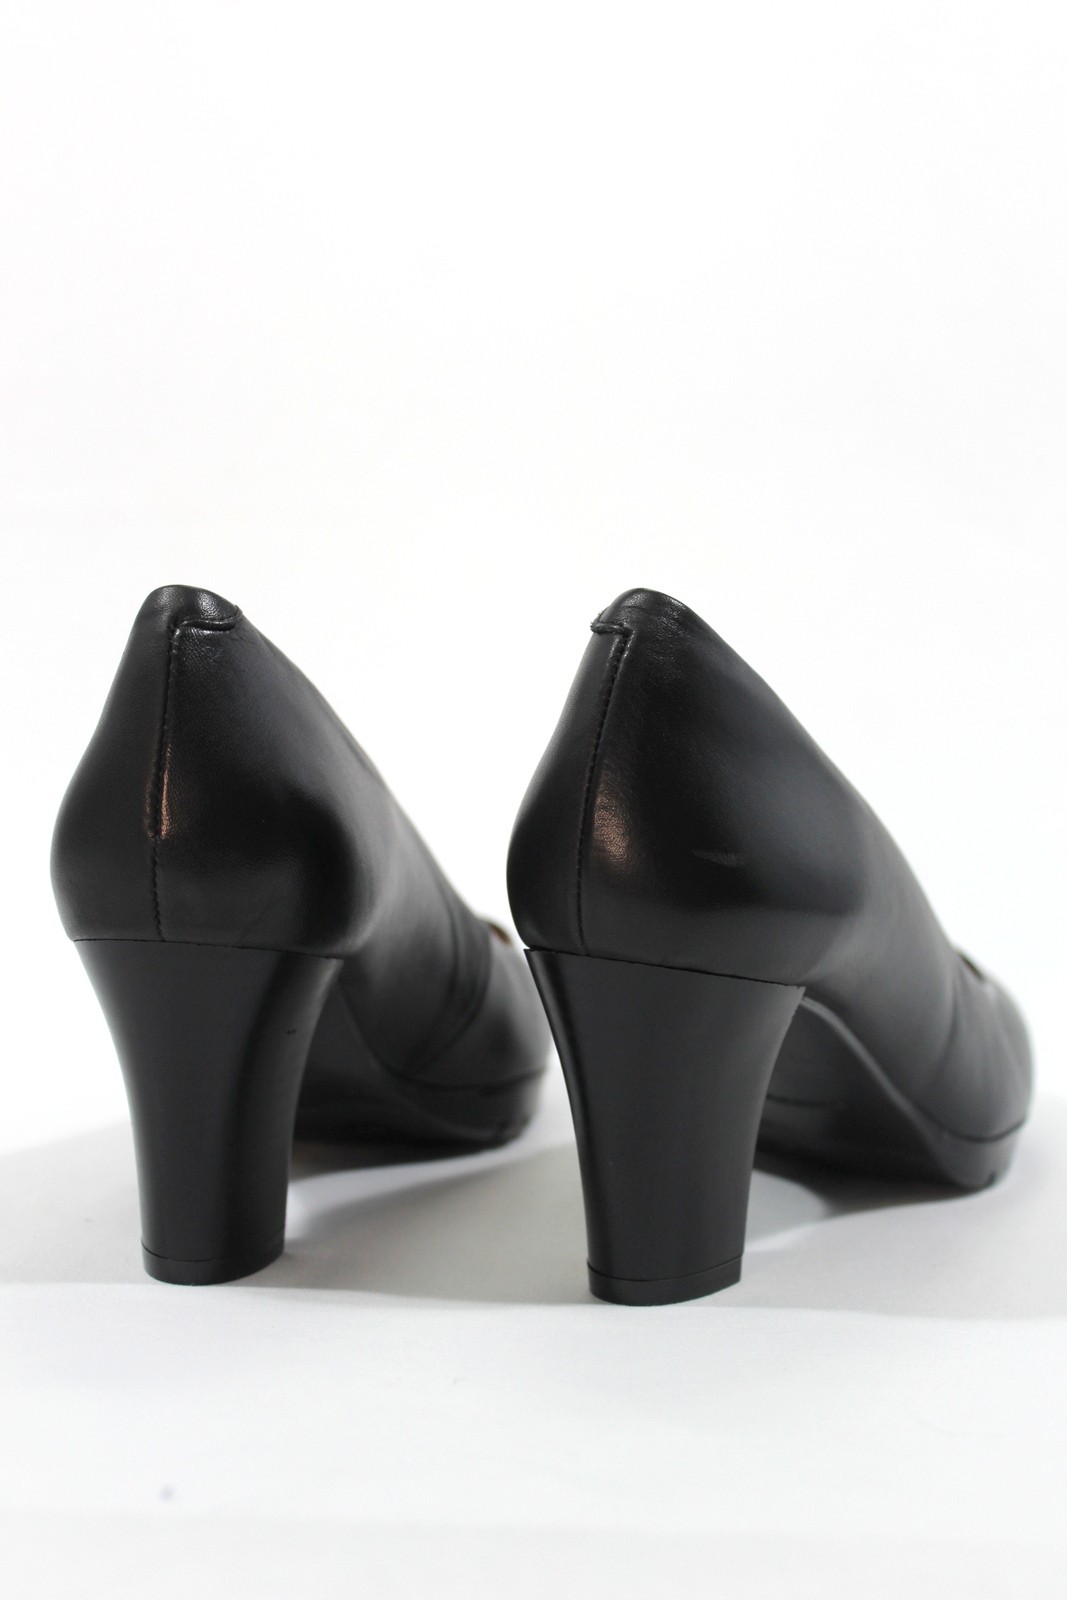 DESIREÉ - Zapato salón piel confortable, ancho 5 Negro.Desireé| Calzados Losada